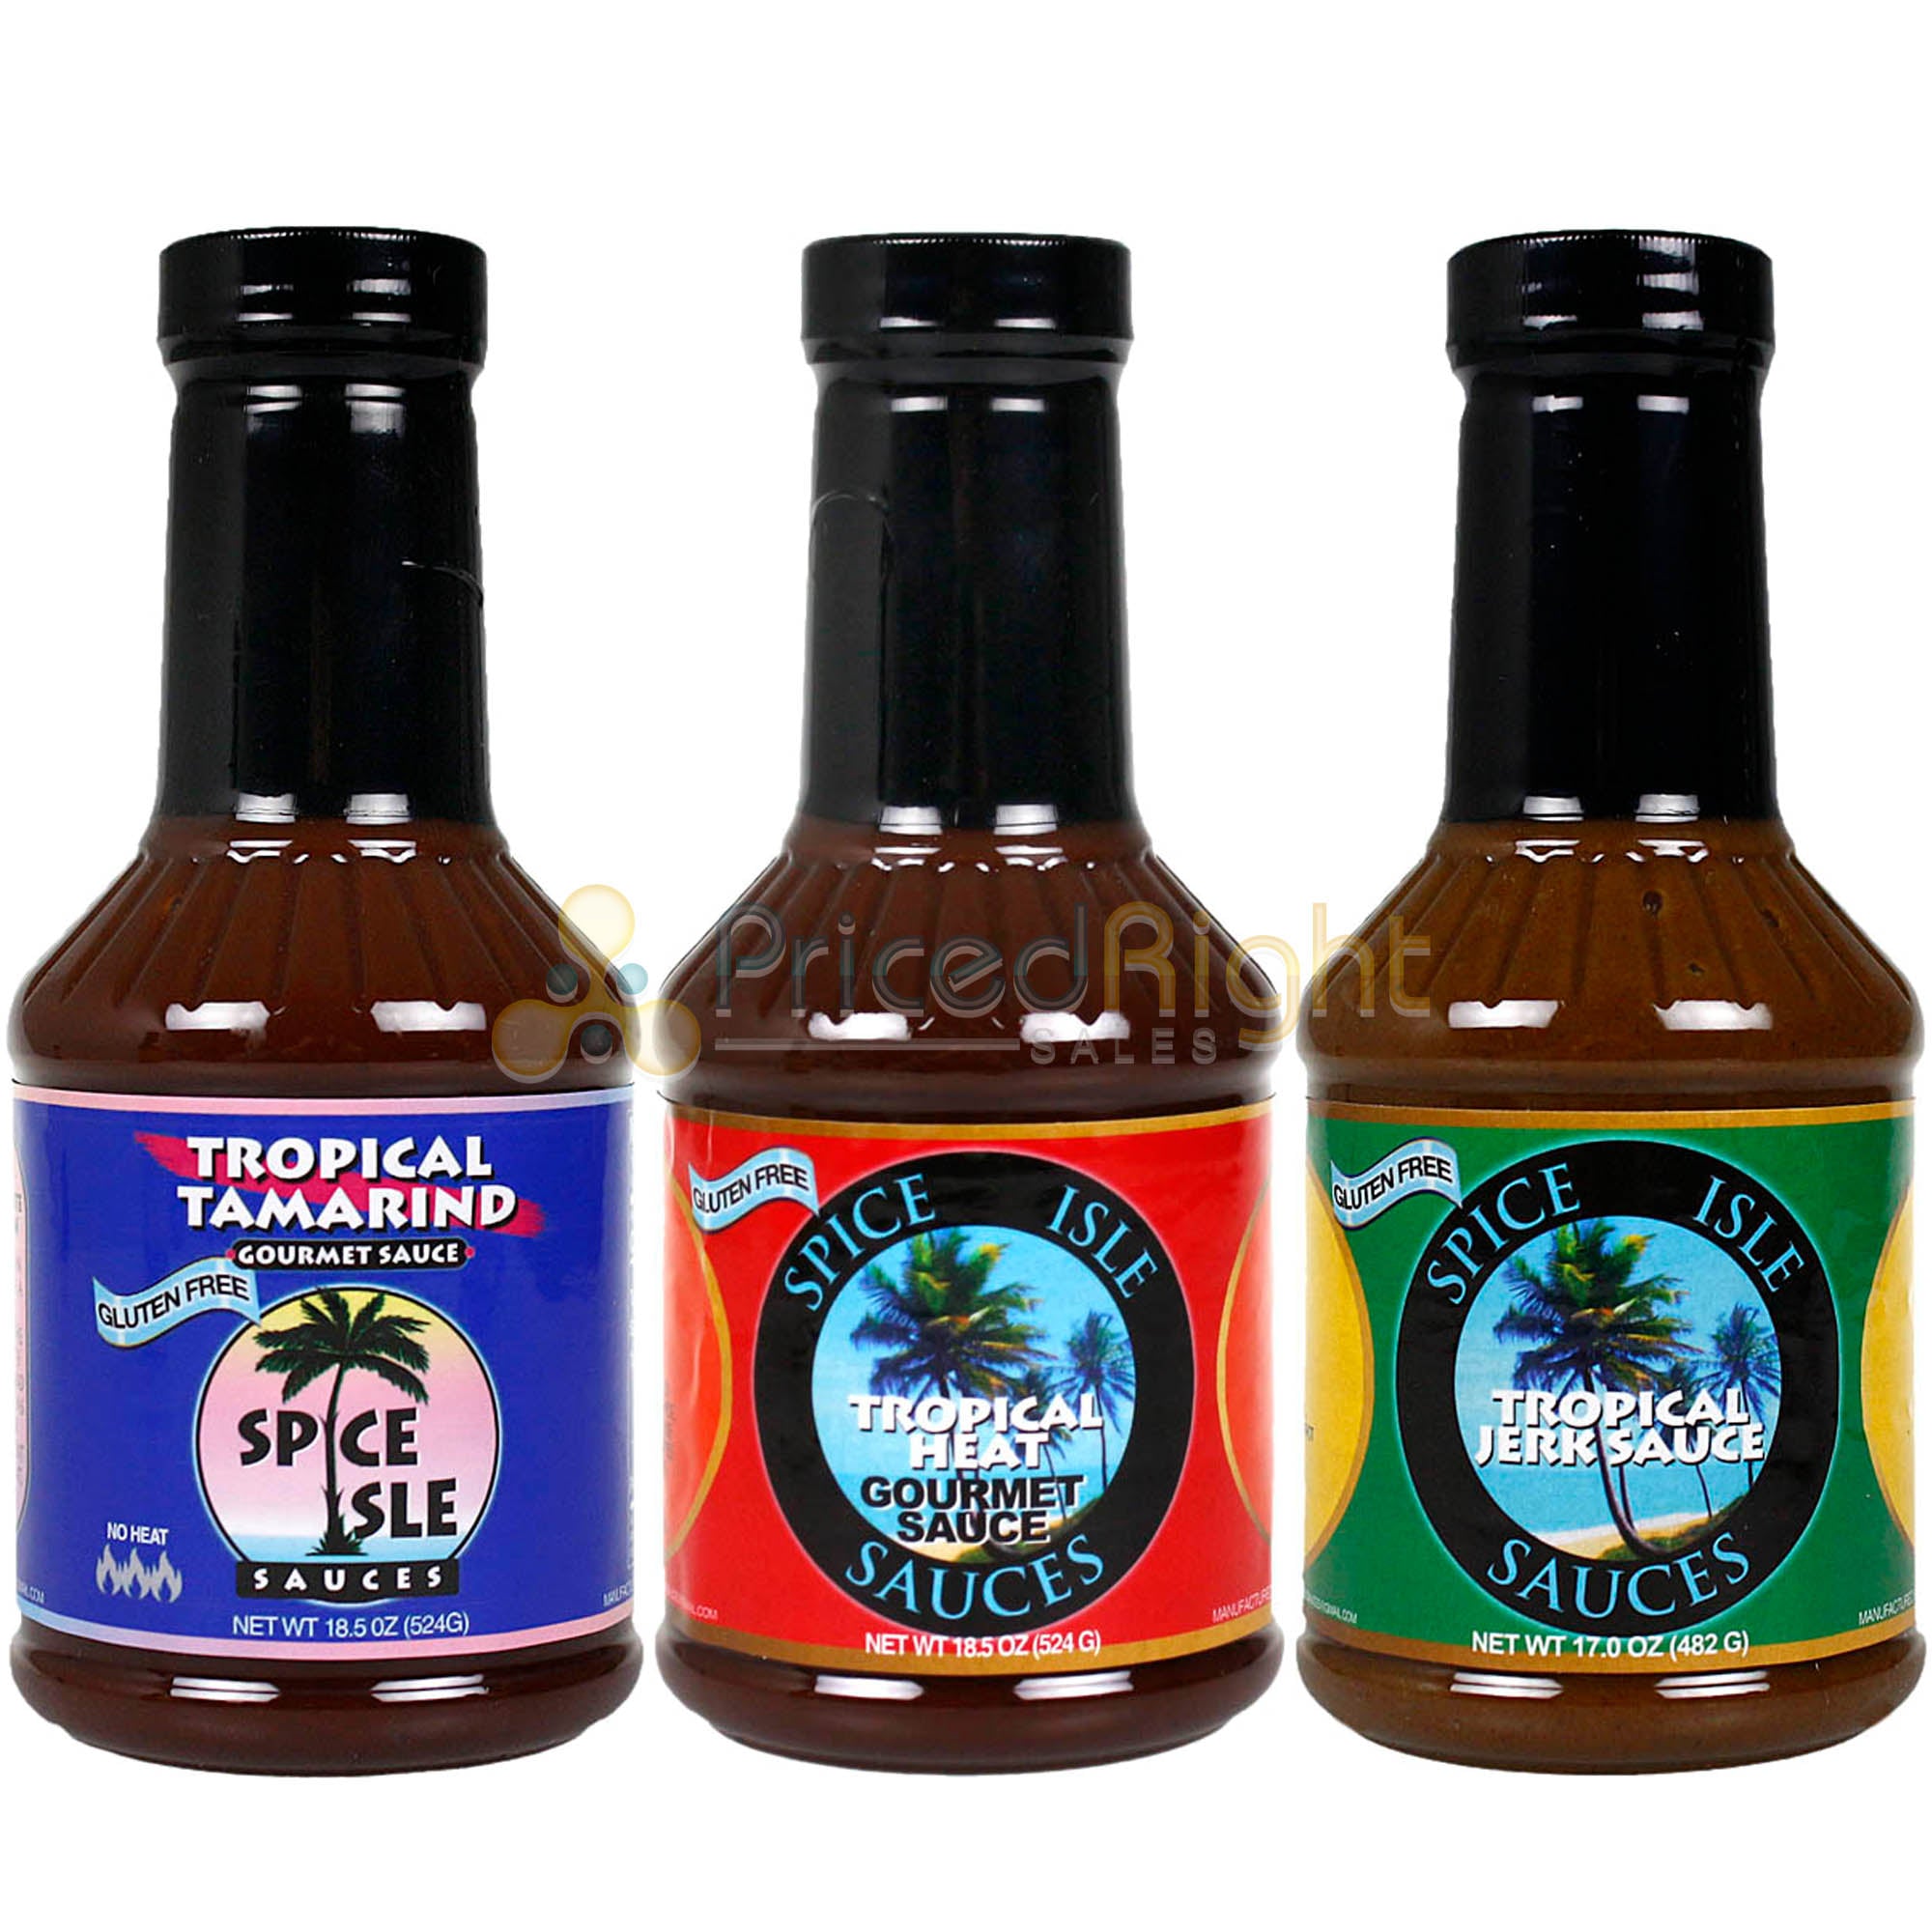 Spice Isle Sauces Tropical Tamarind Heat & Jerk Sauces Combo 3 Pack Gluten Free